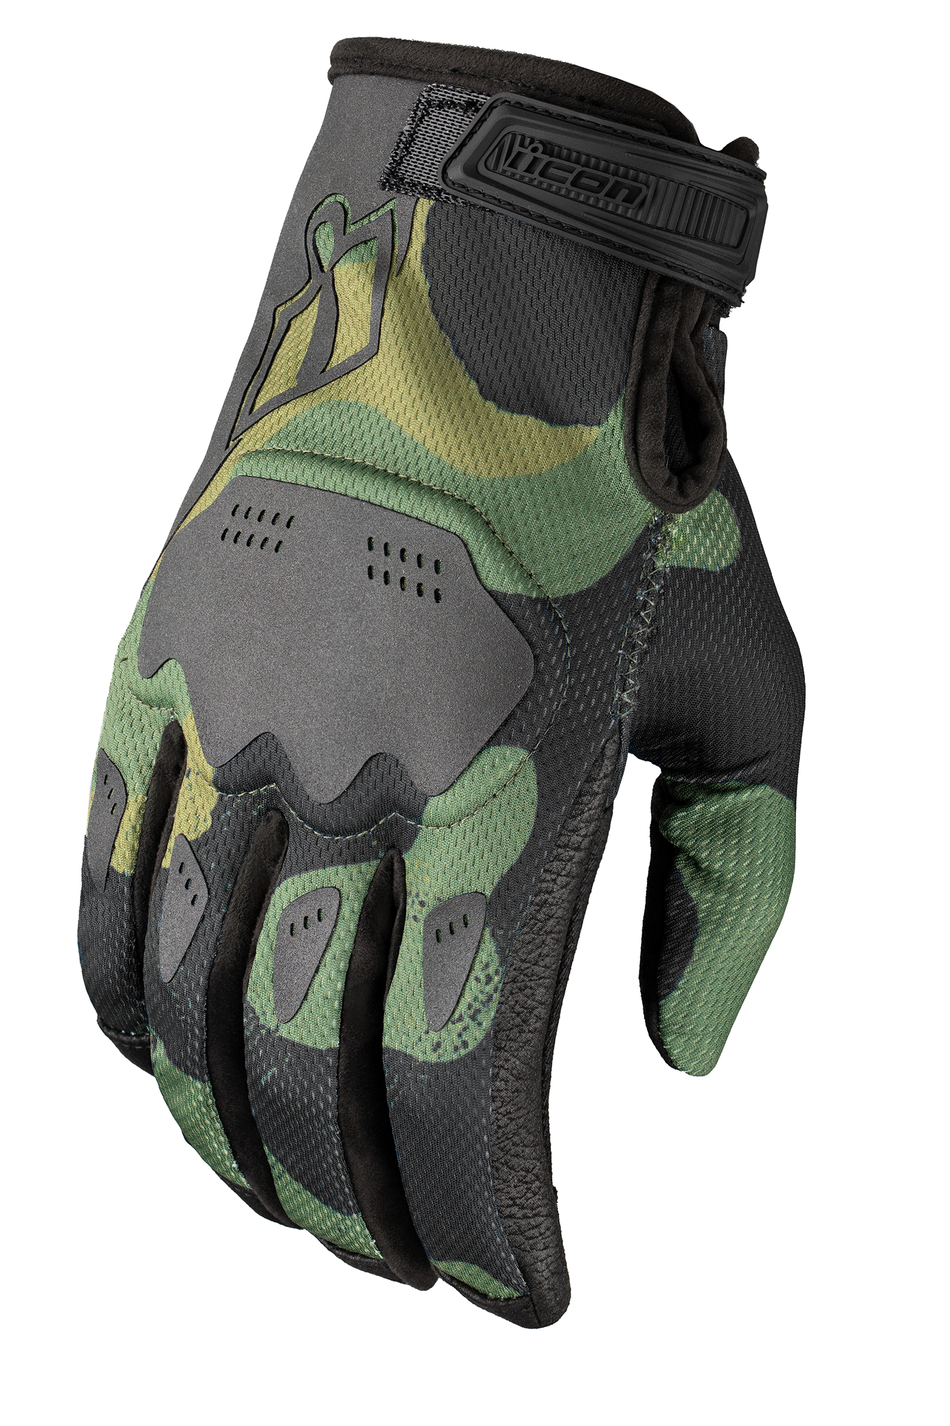 ICON Hooligan Magnacross™ Gloves - Camo Green - Medium 3301-4822